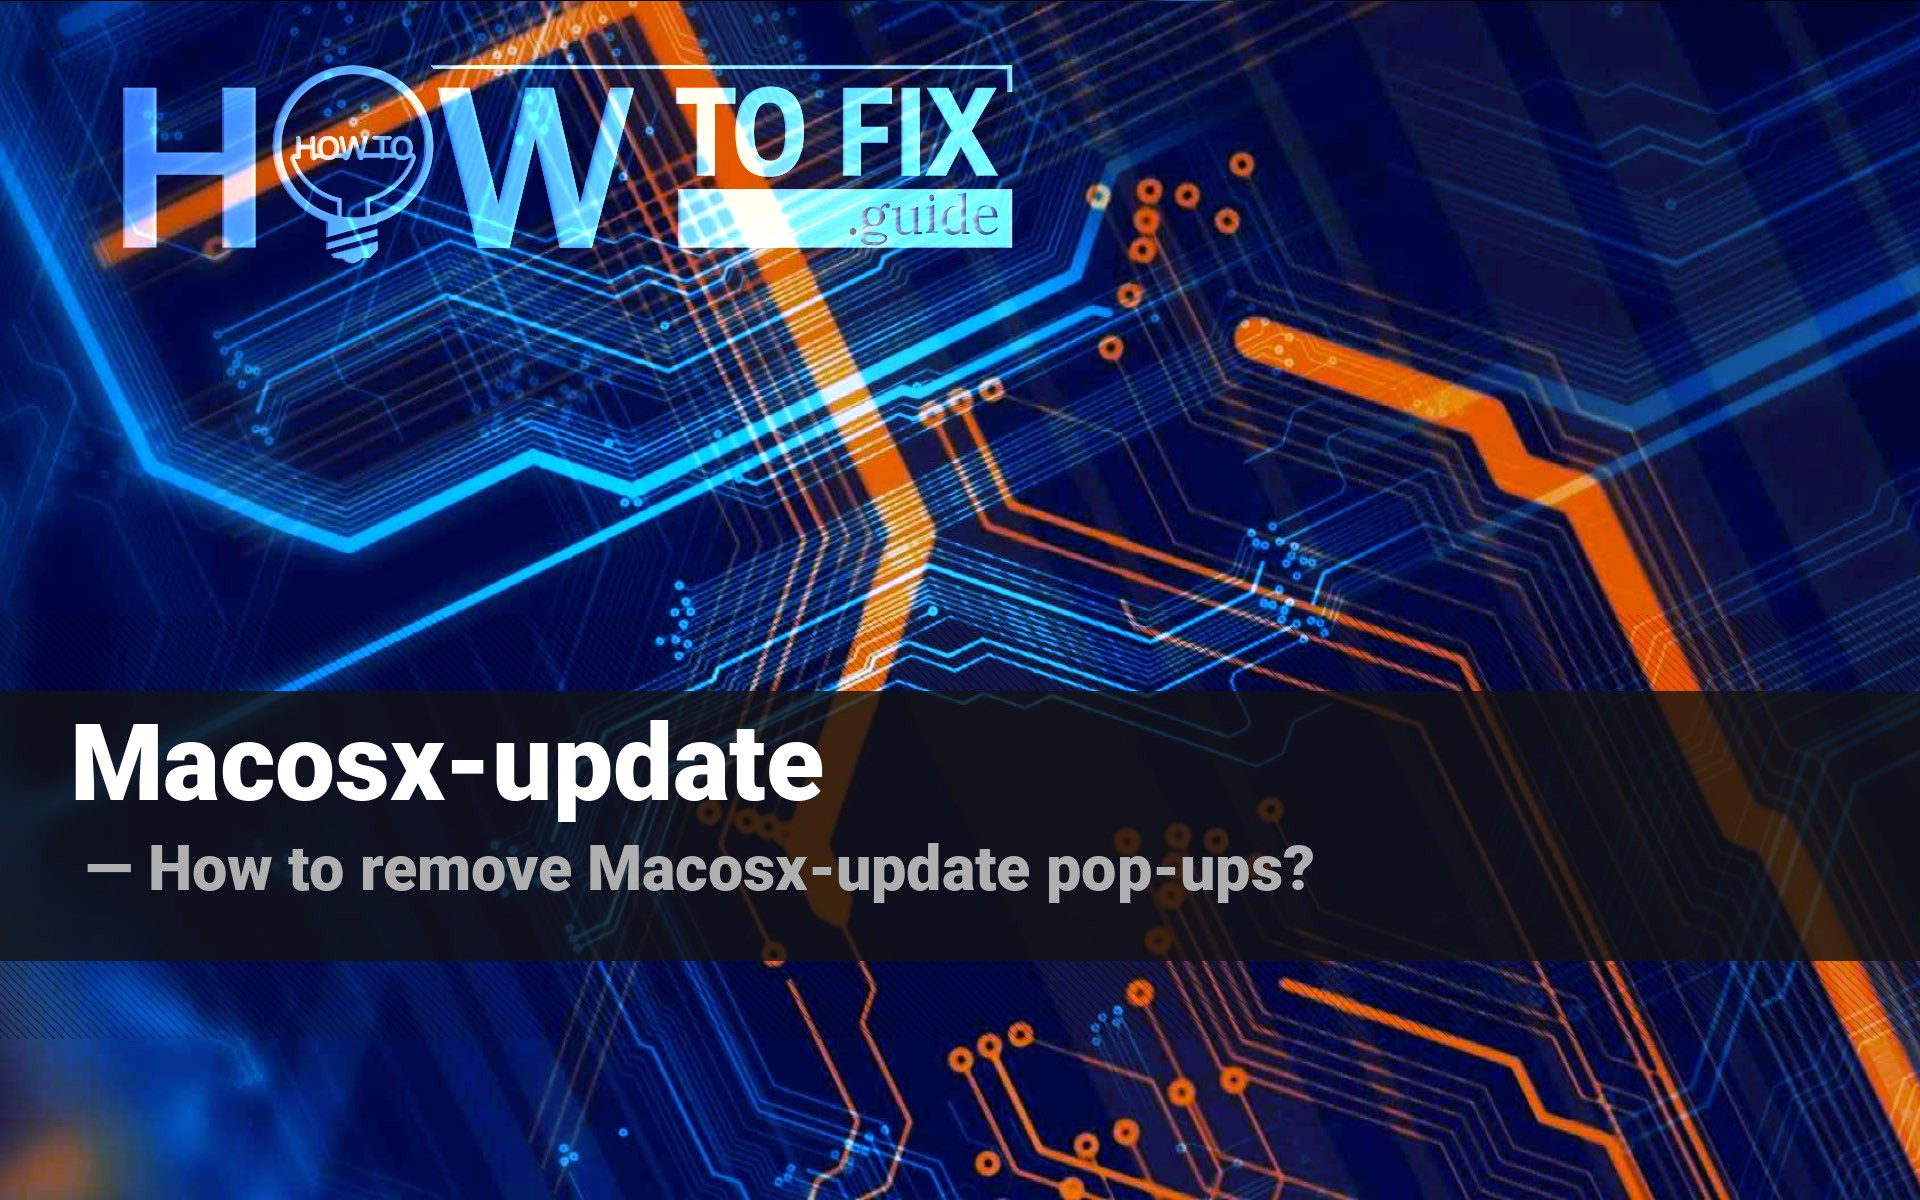 macosx-update.com